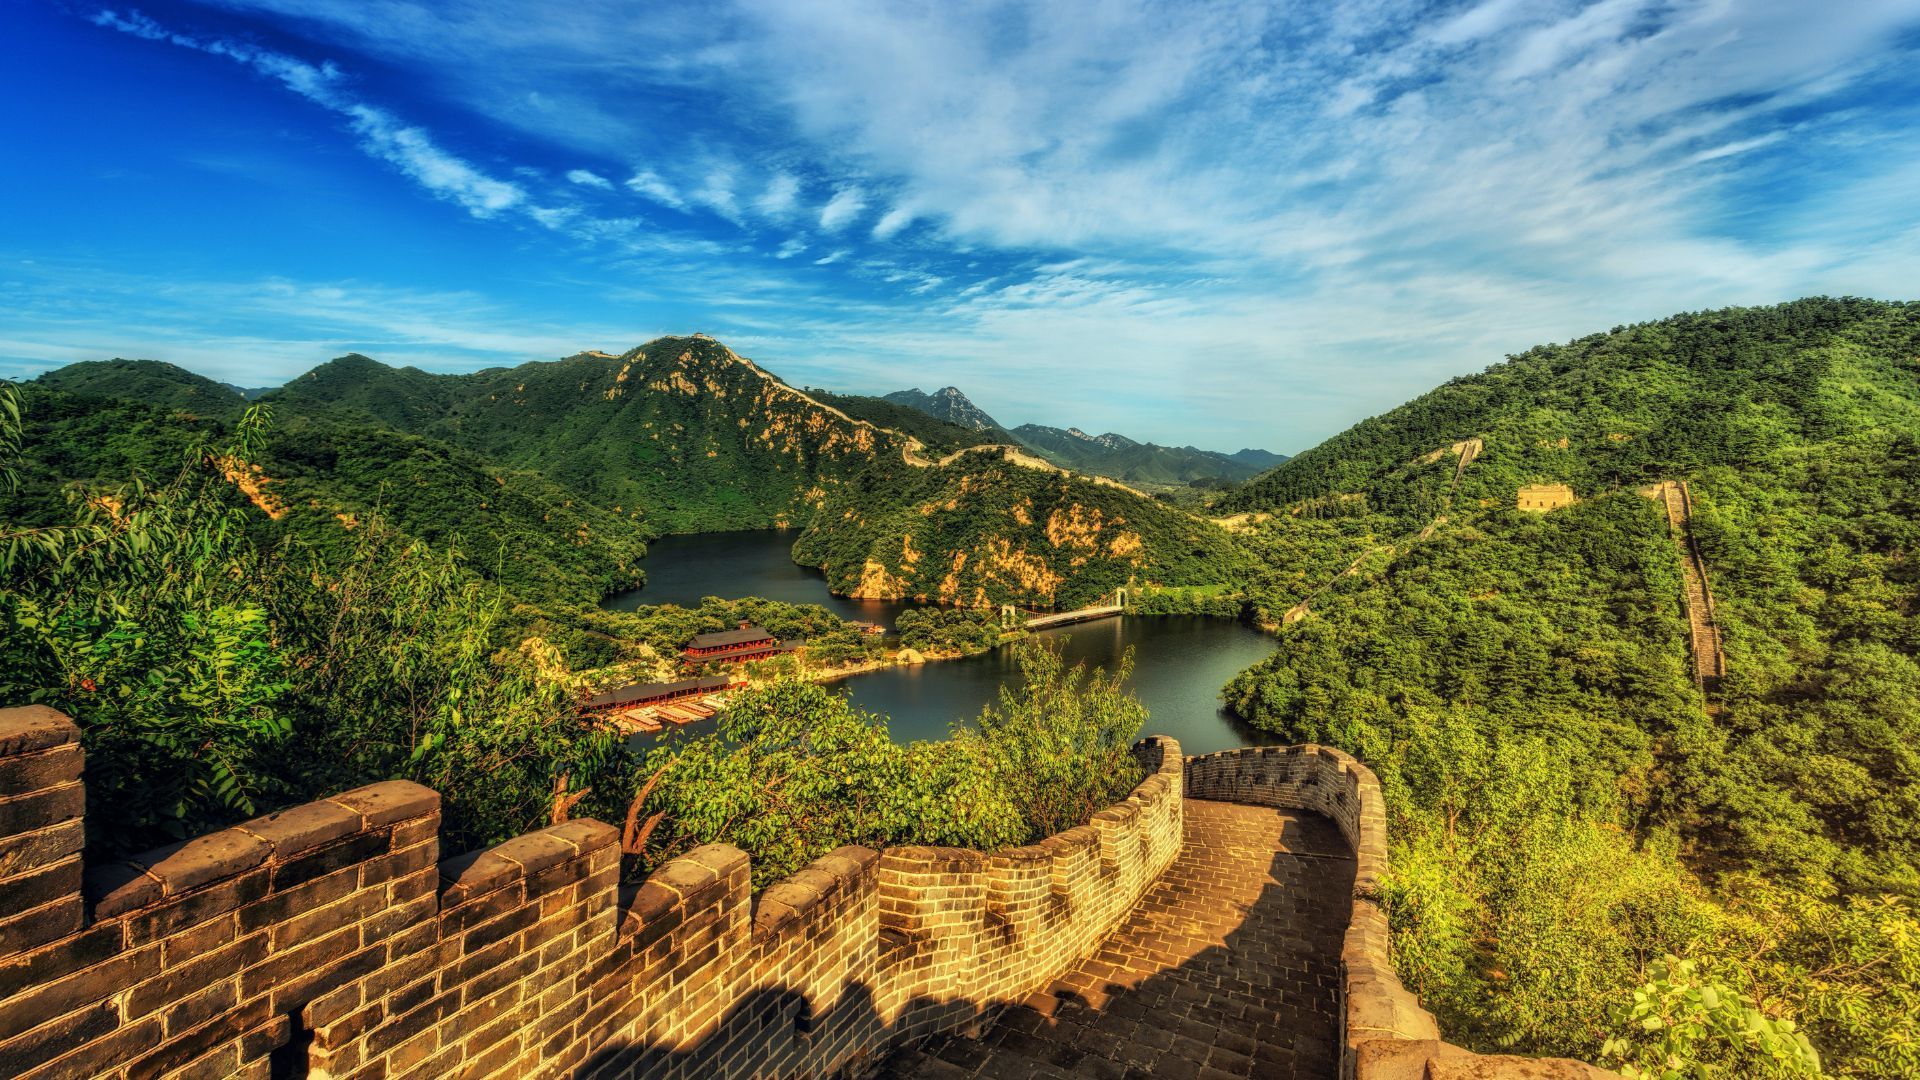 History of Great Wall of China